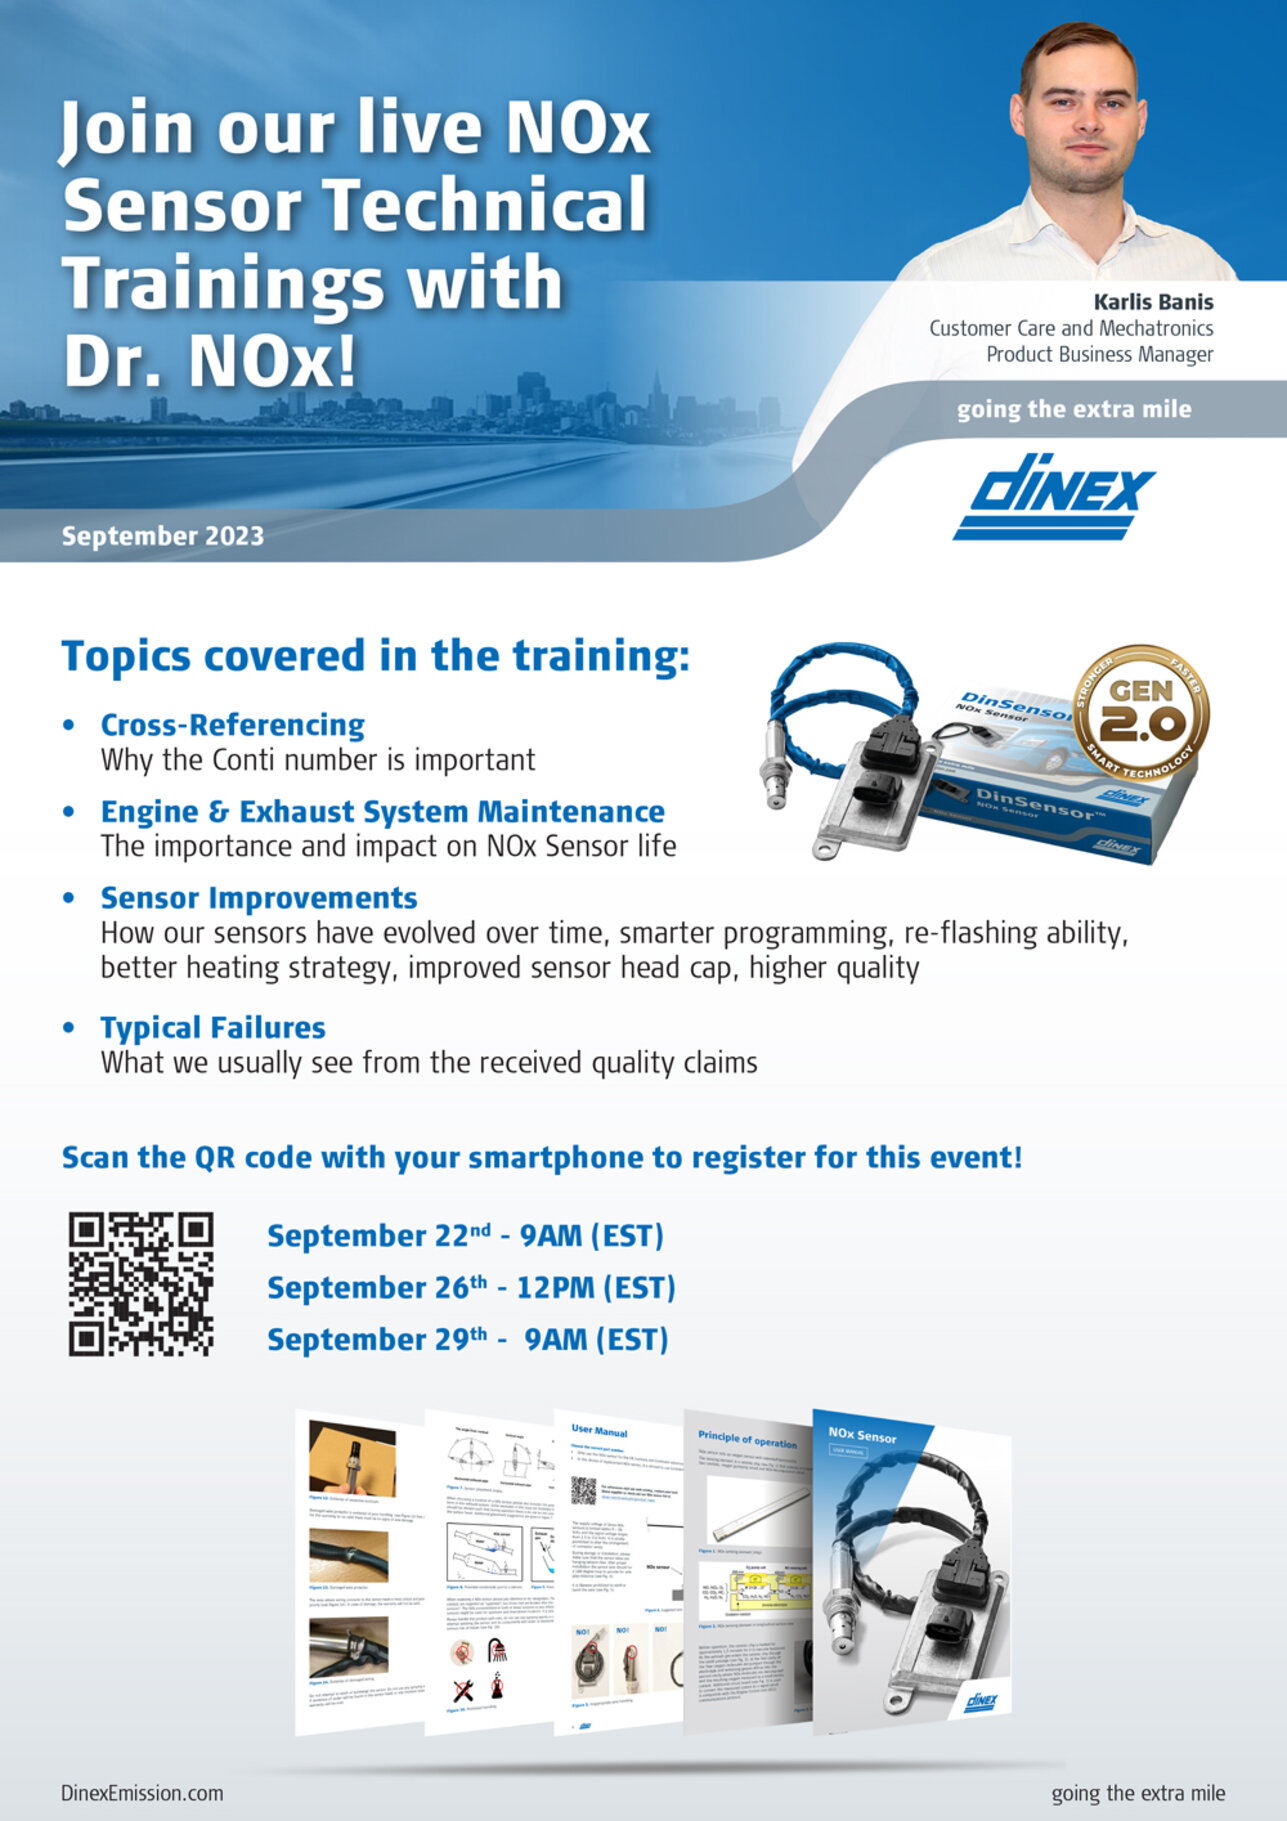 Invitation to live NOx sensor training with Dr. NOx!